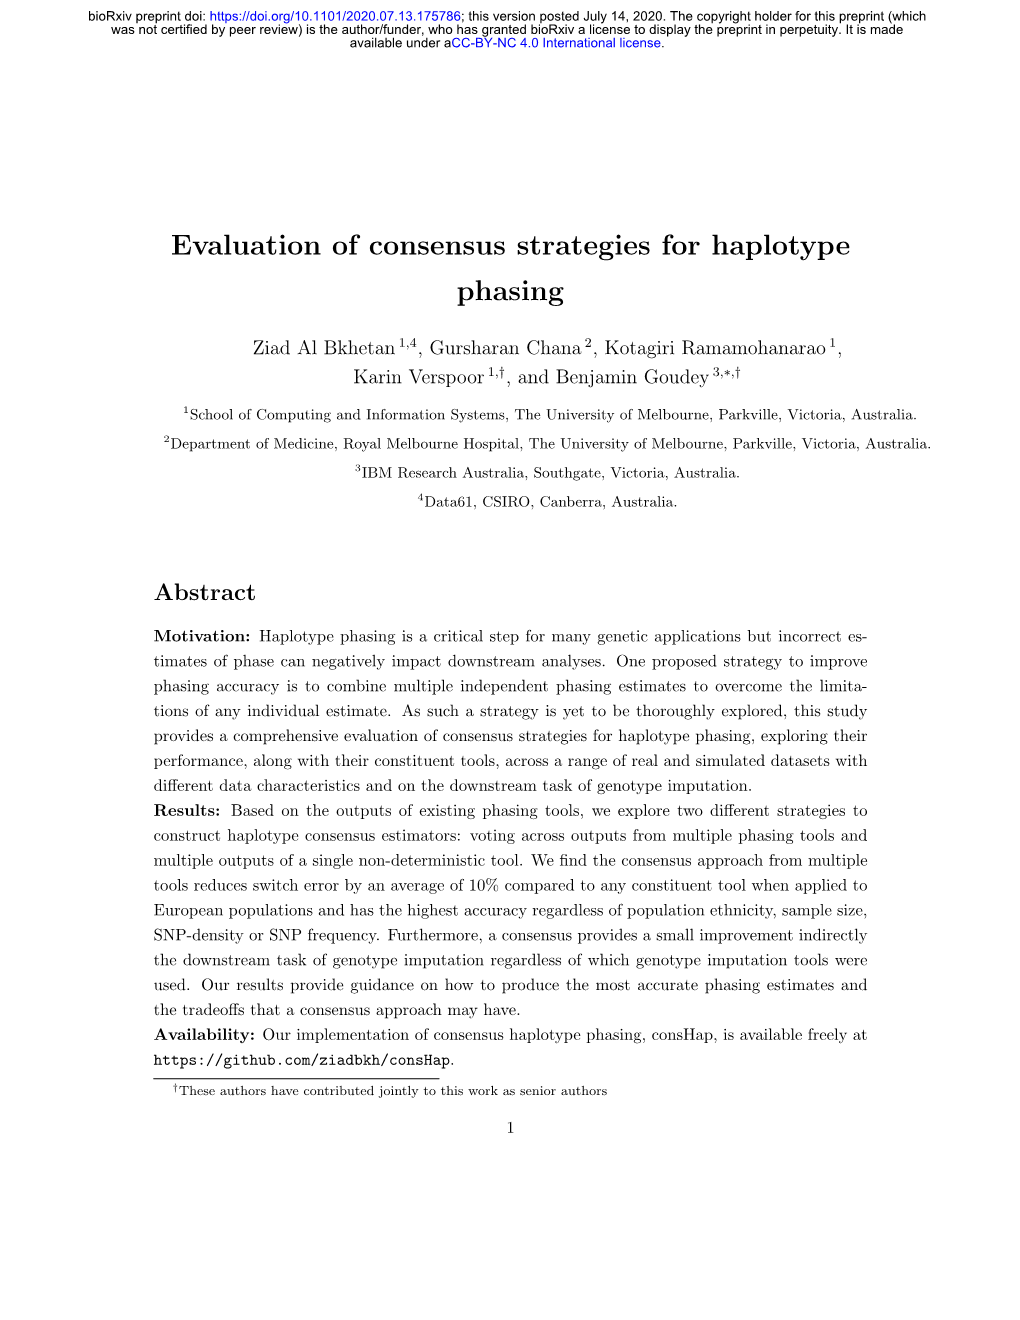 Evaluation of Consensus Strategies for Haplotype Phasing